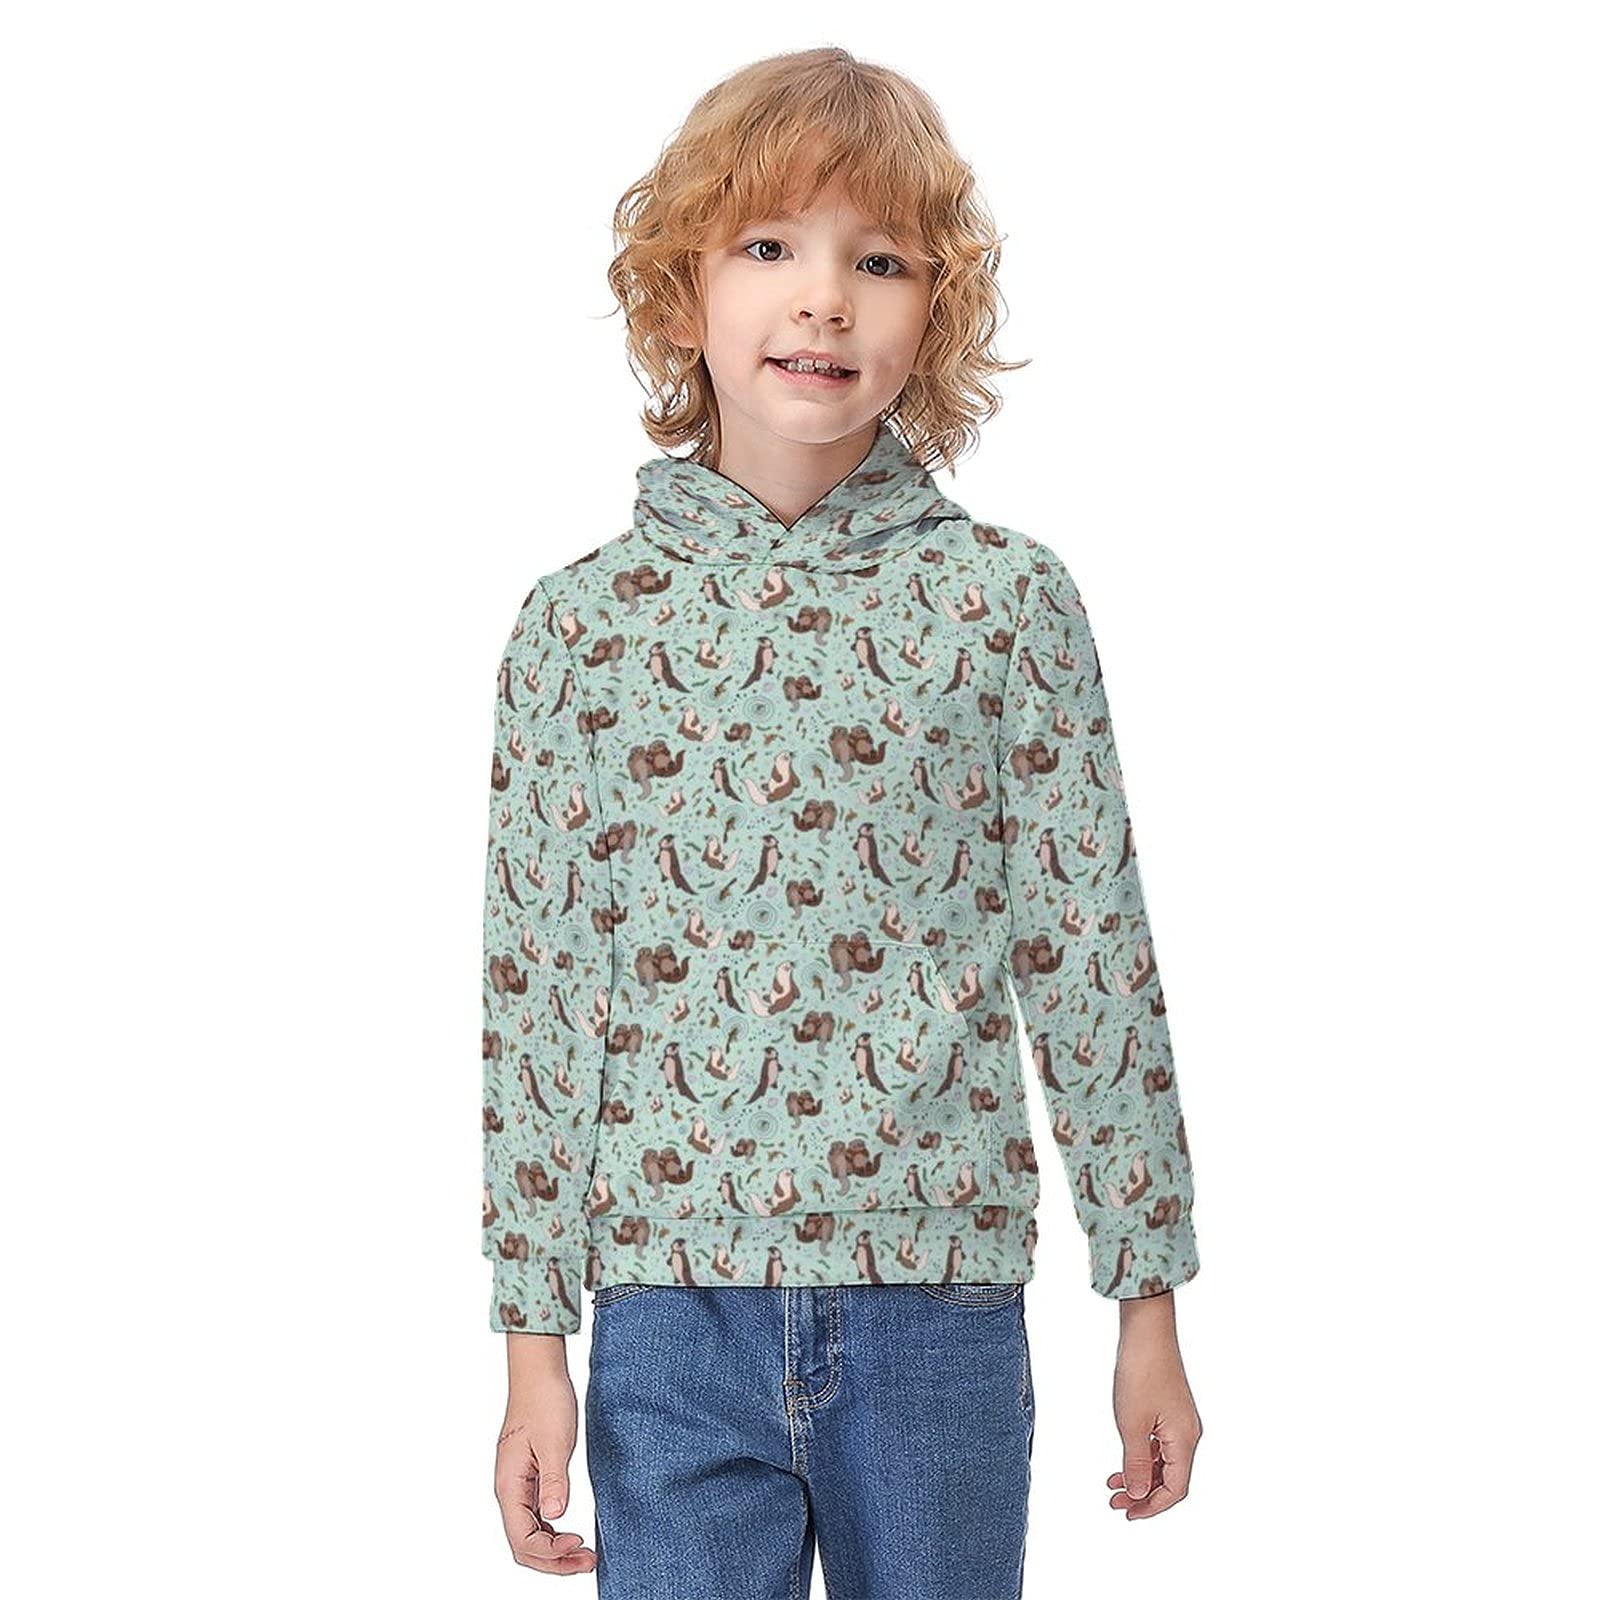 Sea Otters Children's Hoodies Printed Hooded Pullover Sweatshirt For Boys Girls